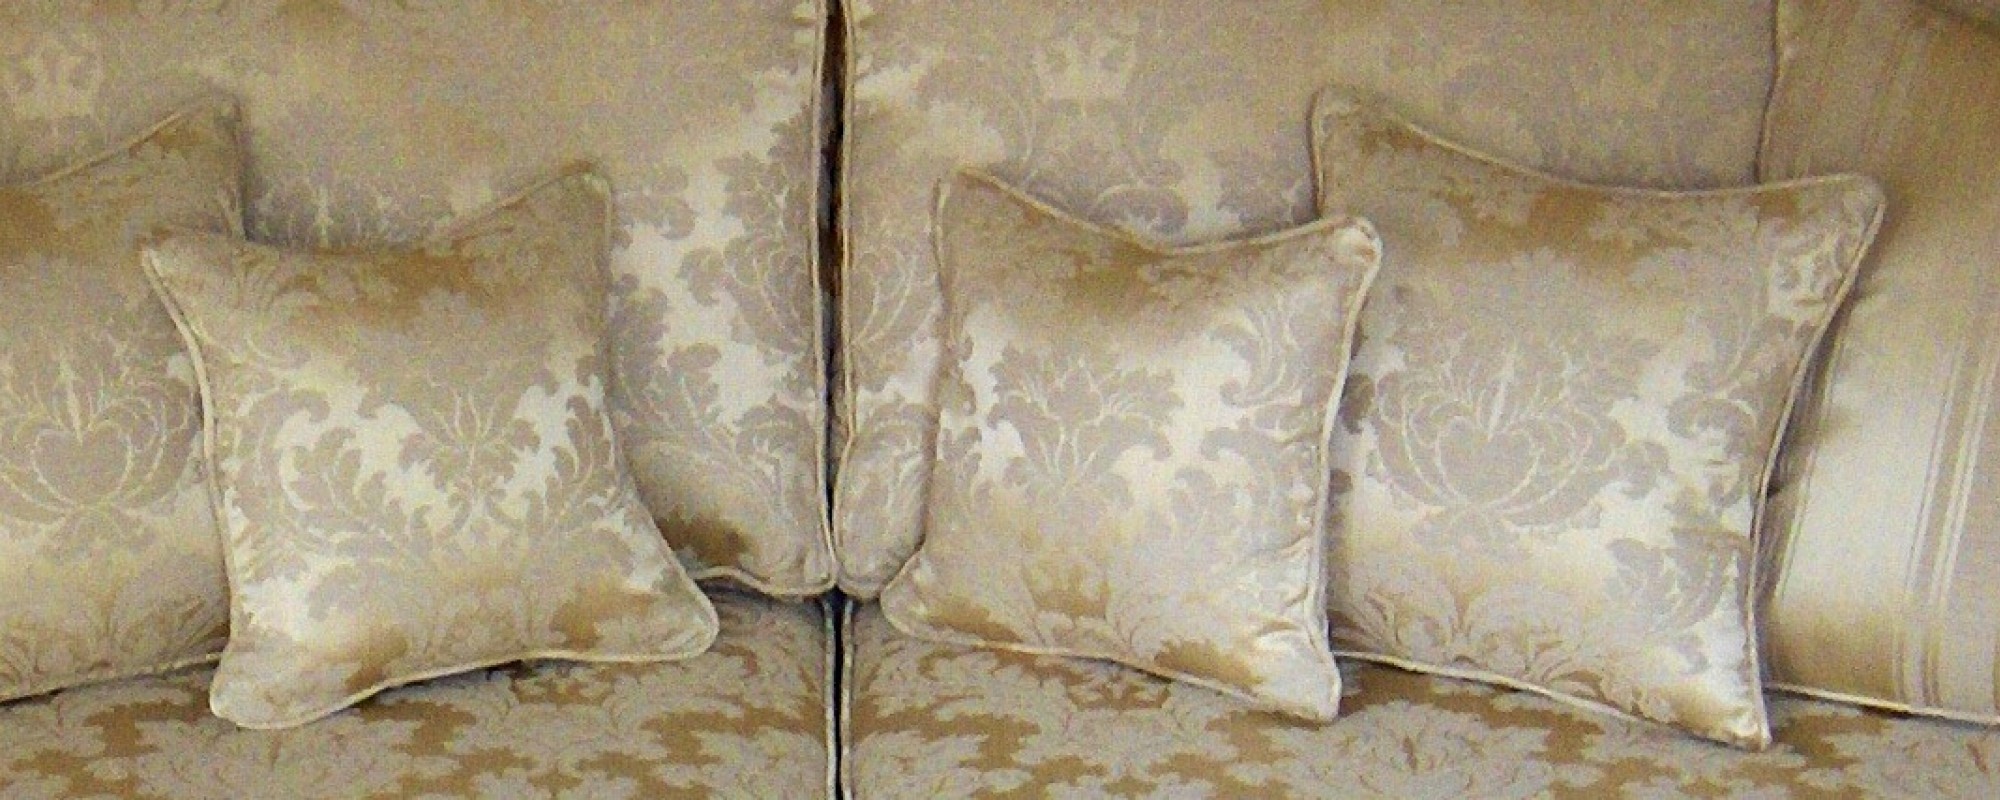 trafalgar sofa designs ralvern upholstery cannock